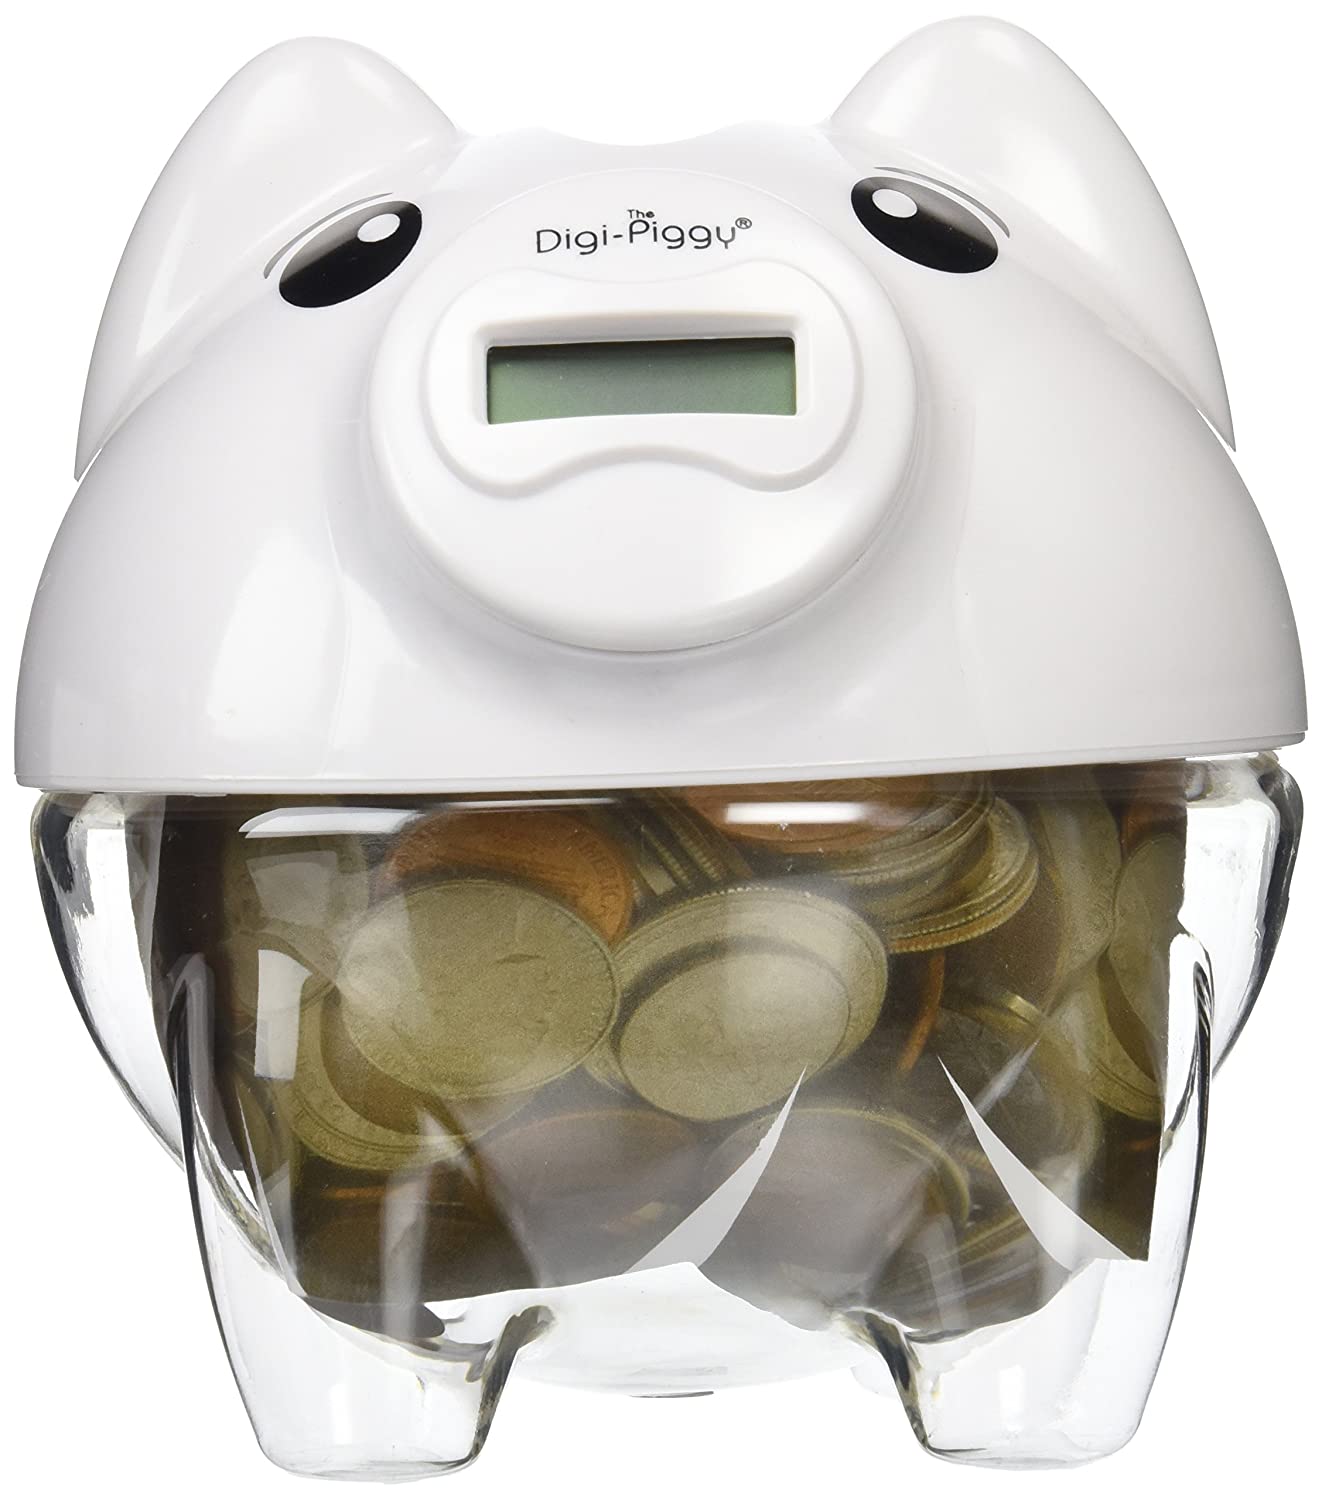 The Digi-Piggy Digital Coin Counting Bank